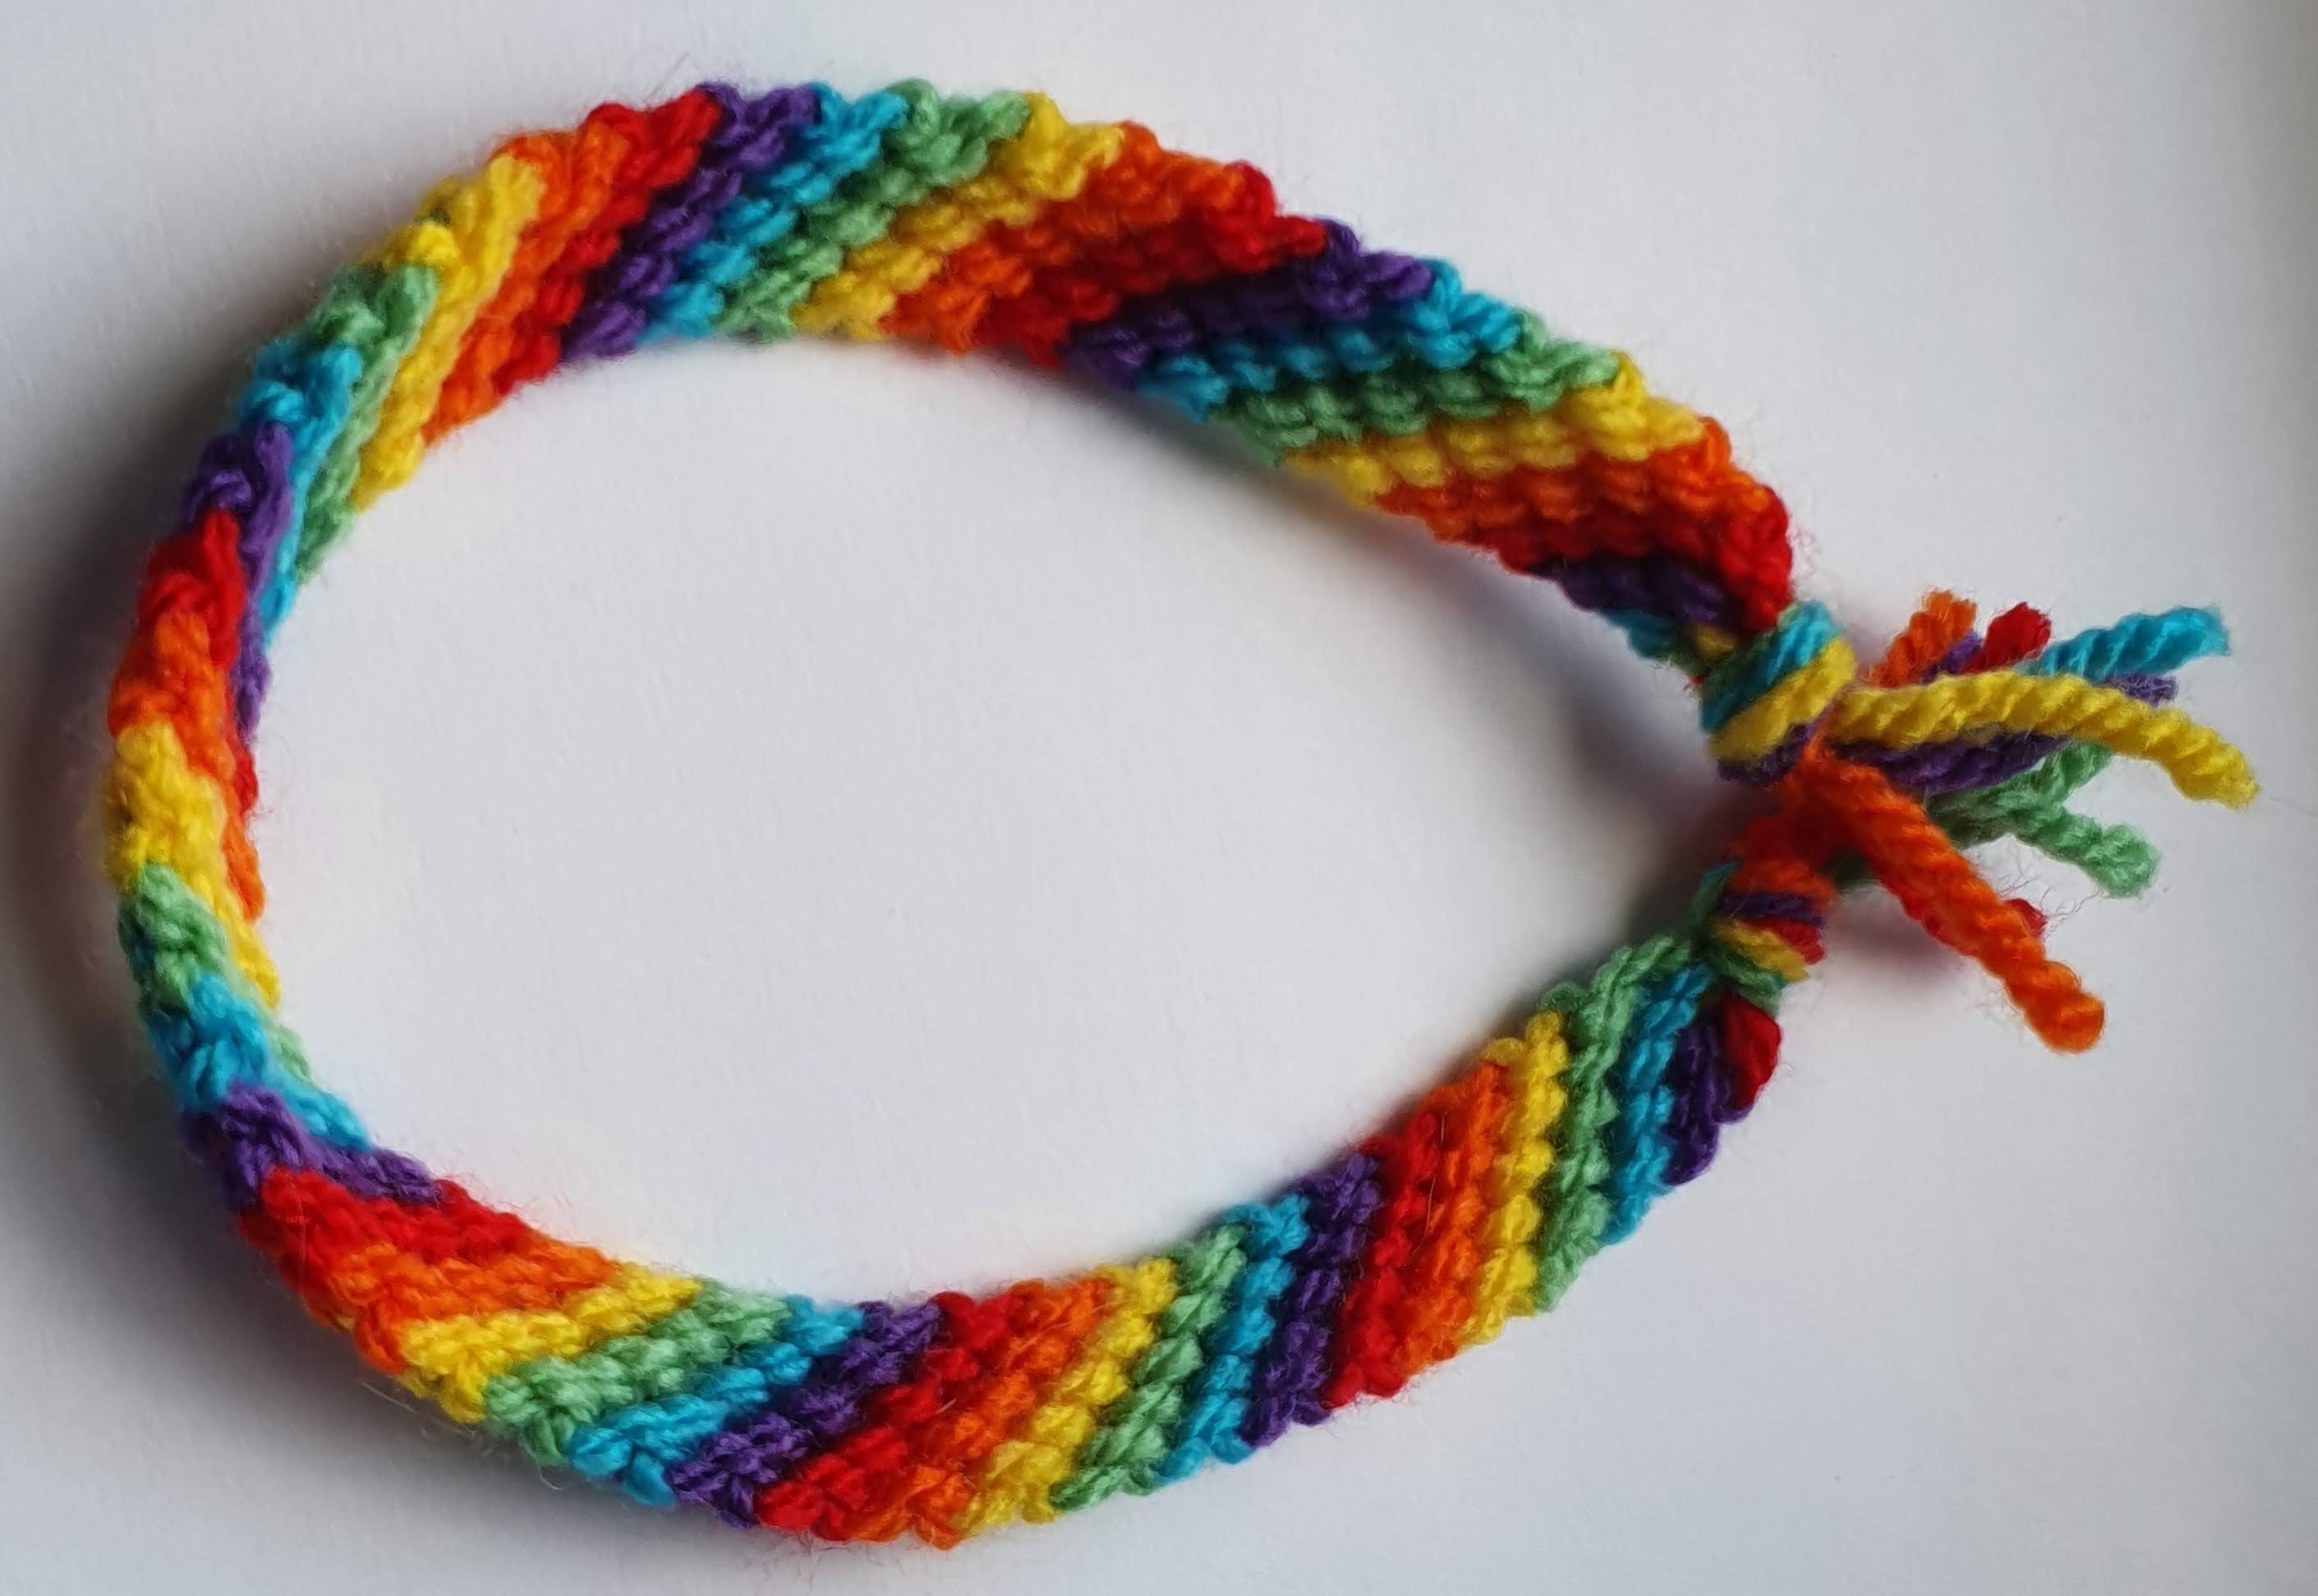 Bracelet with diagonal rainbow stripes